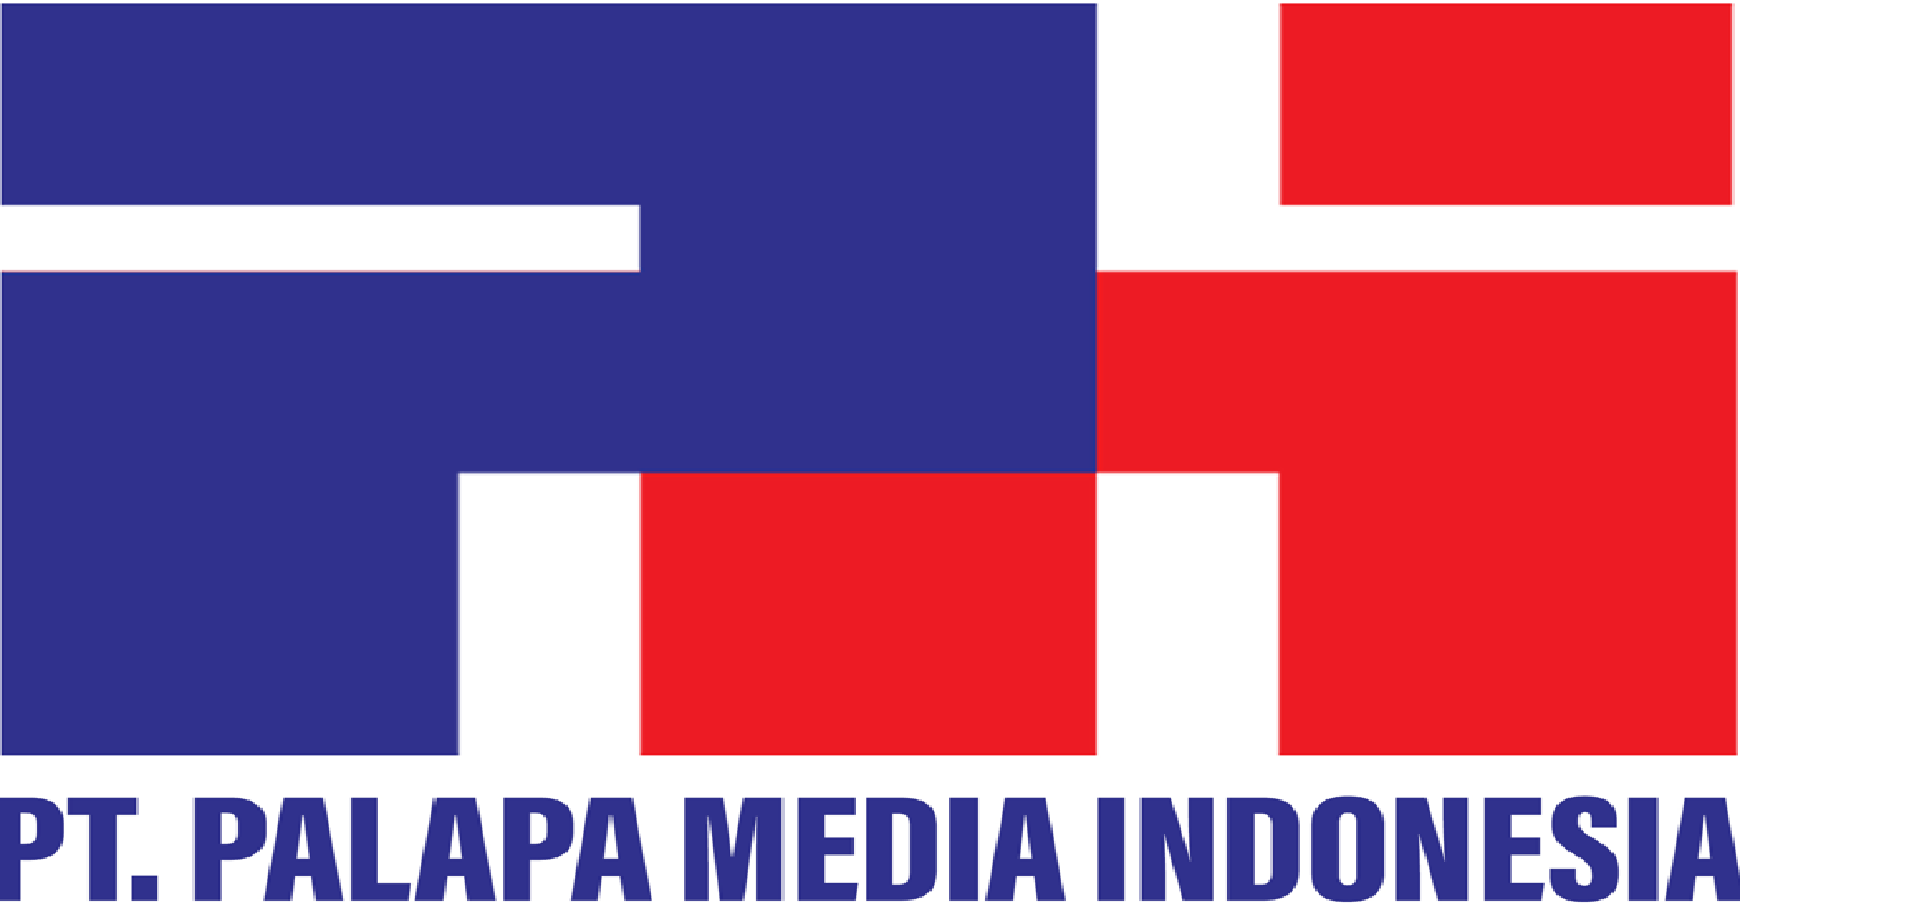 PT PALAPA MEDIA INDONESIA